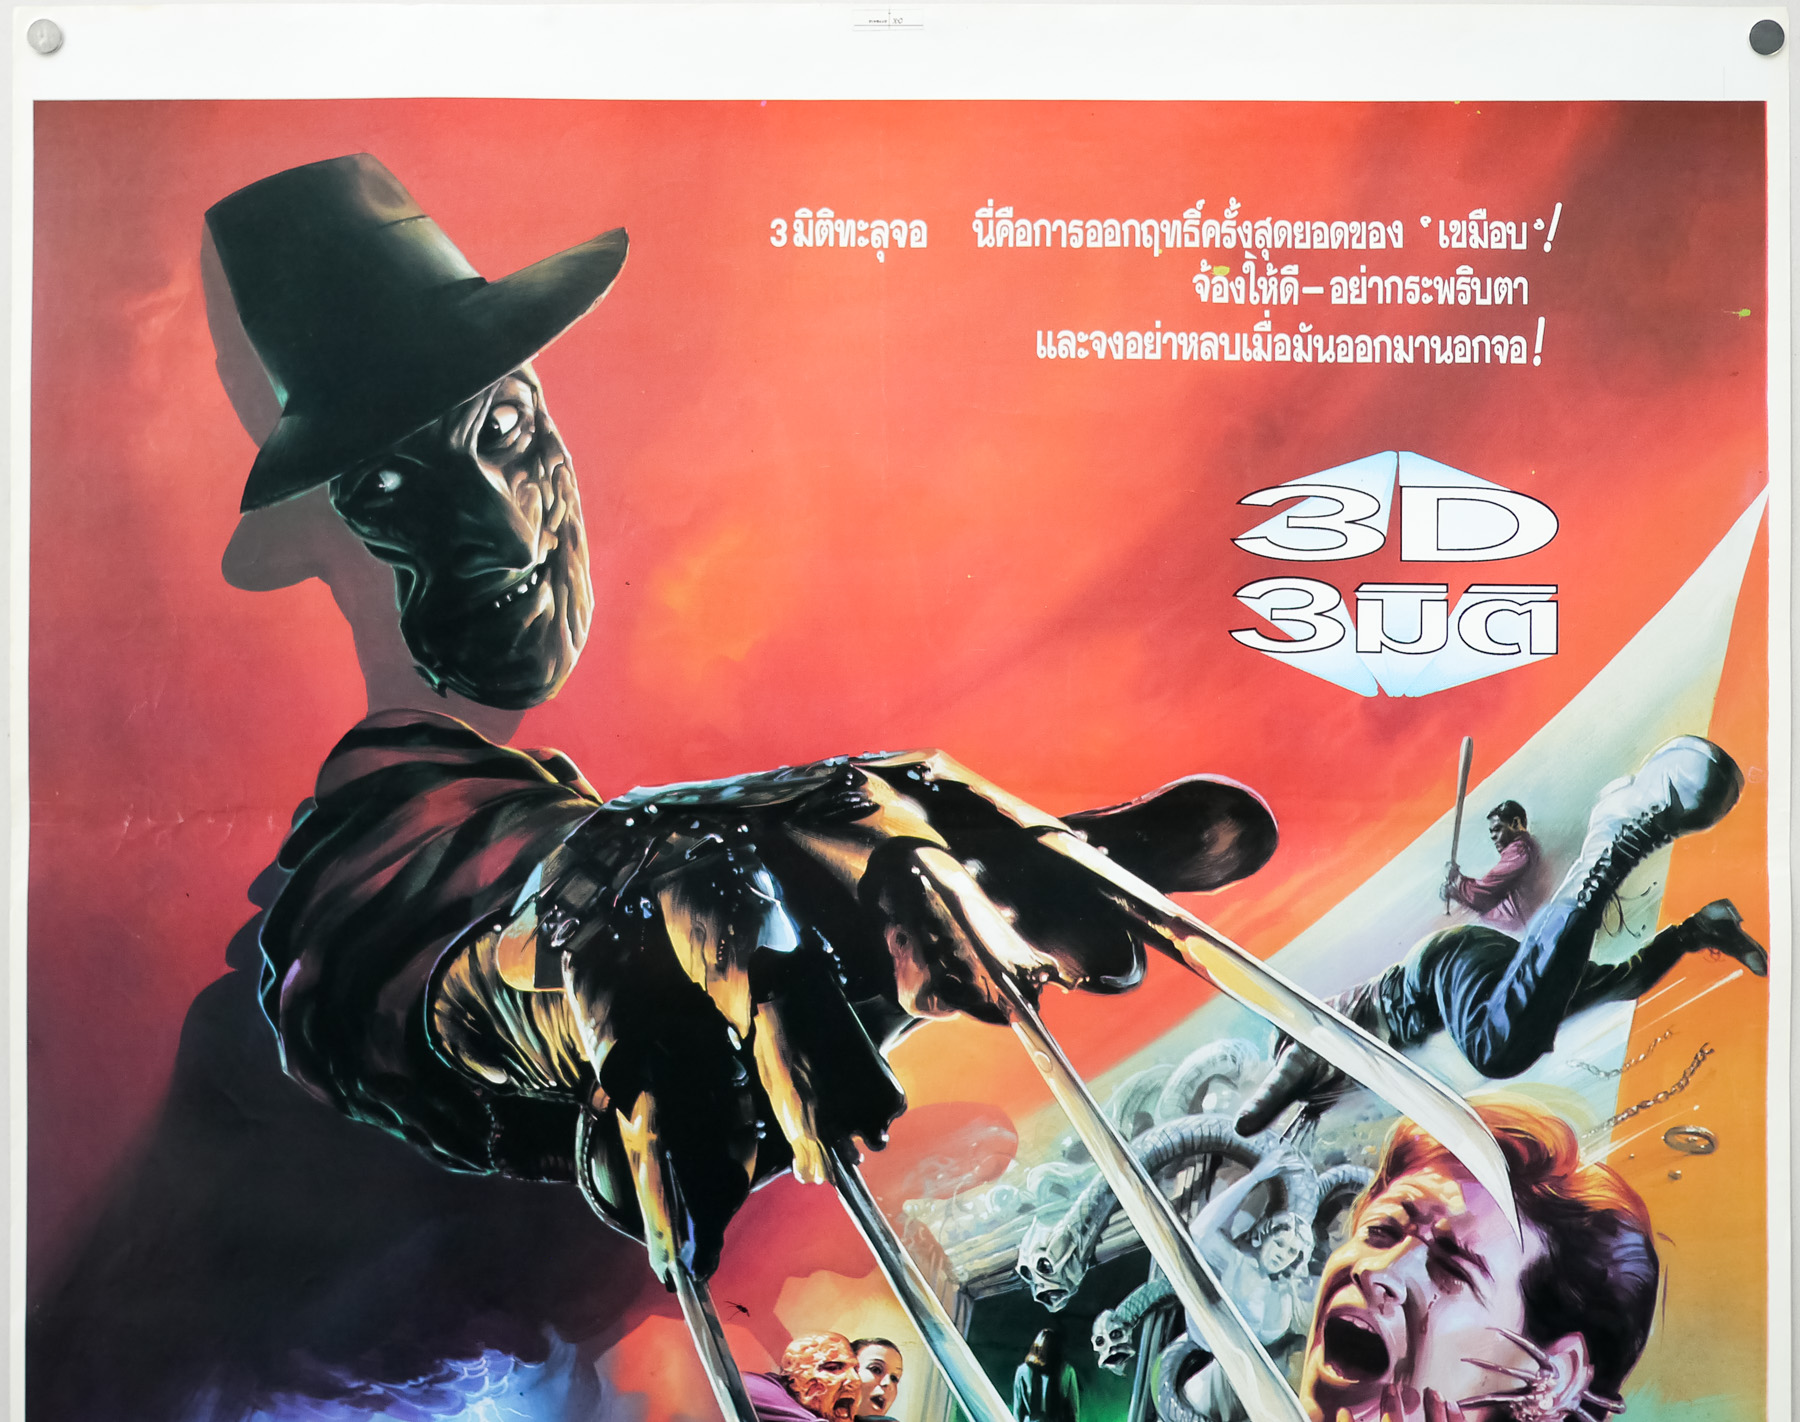 Freddy's Dead: The Final Nightmare — Ads